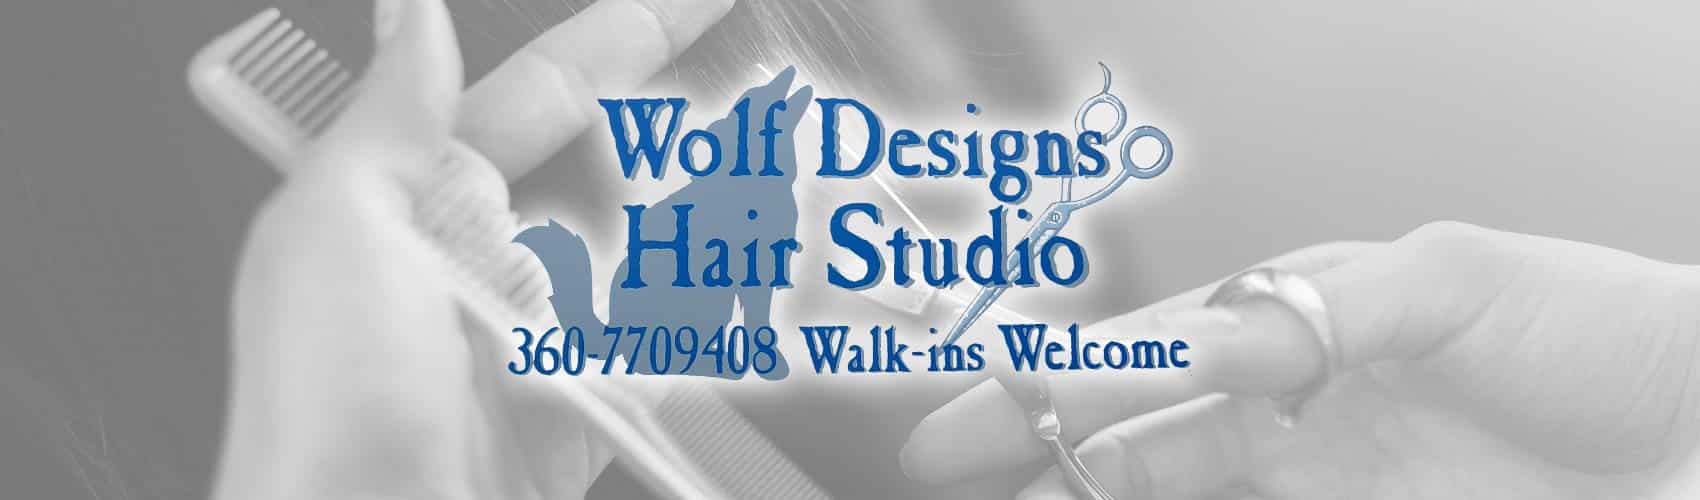 Wolf Designs Hair Studio logo